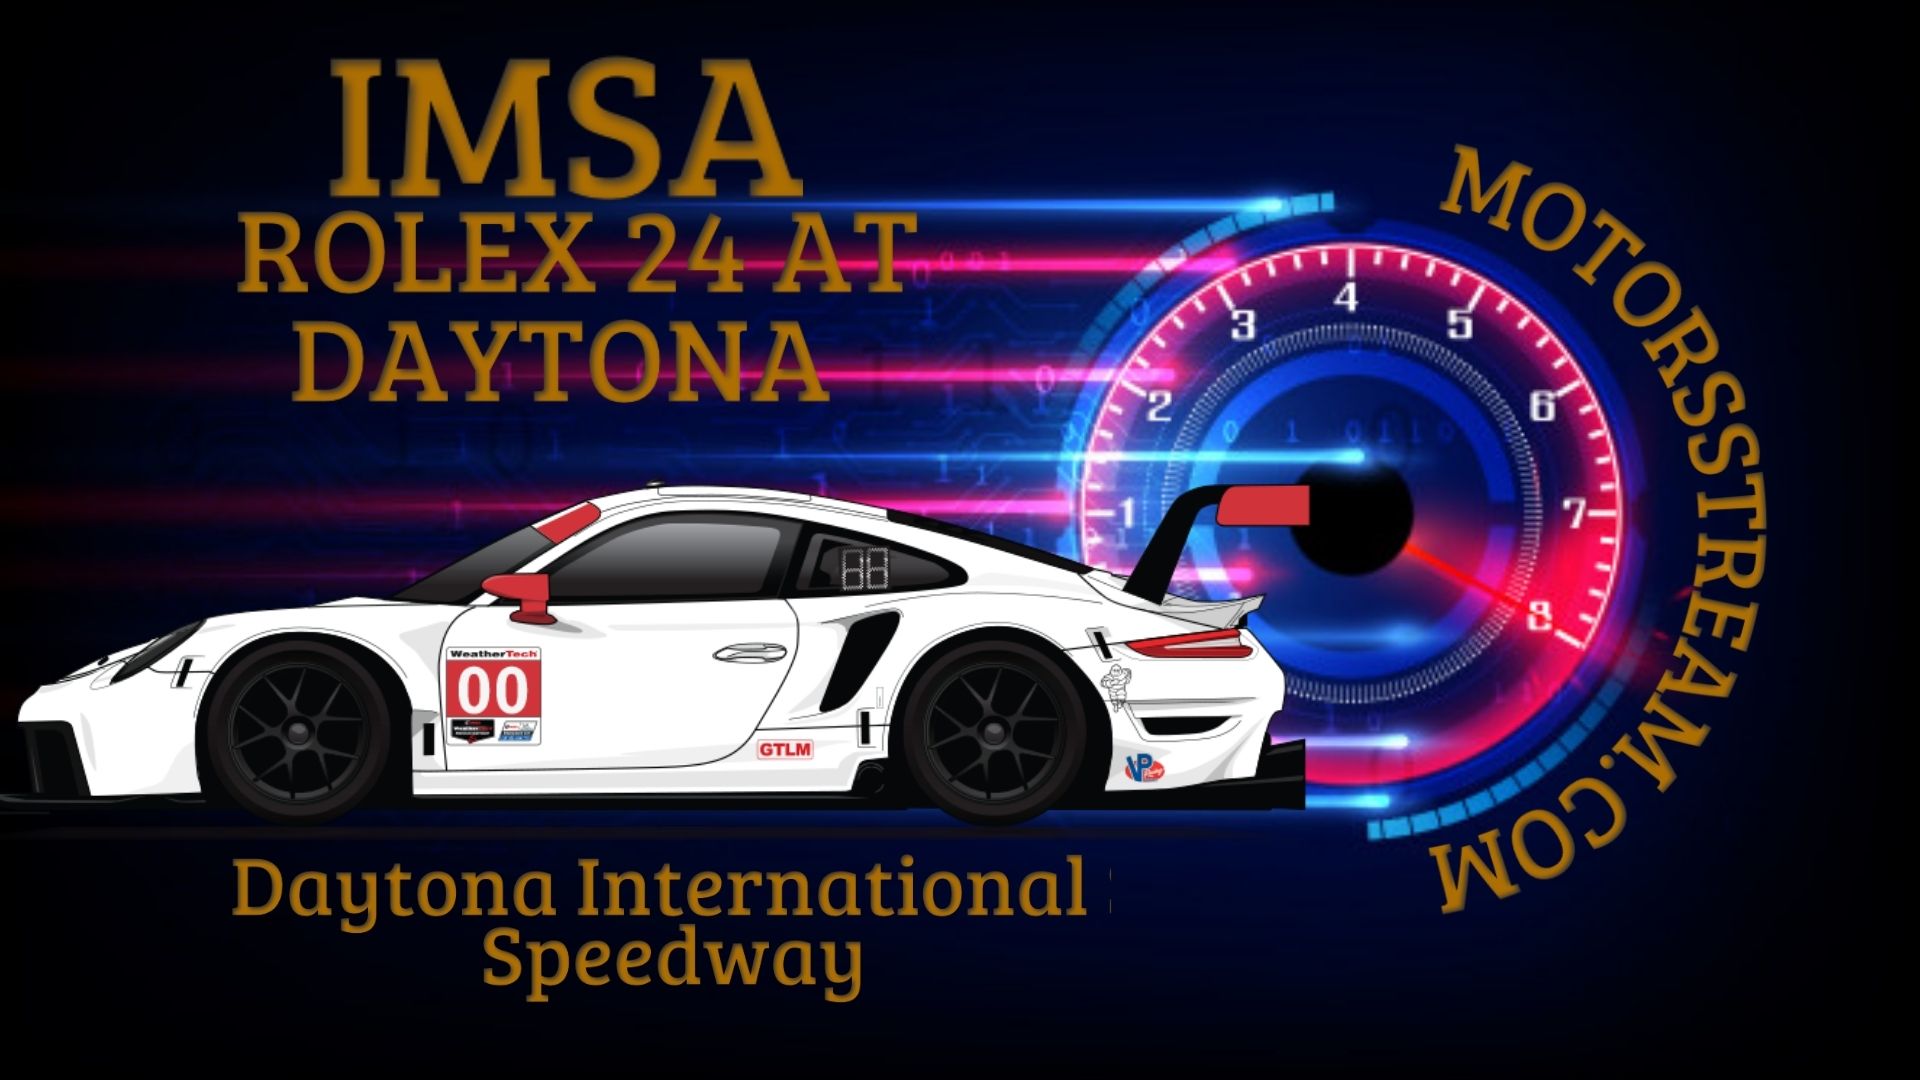 The Rolex 24 Hour Daytona TV Broadcasting Schedule